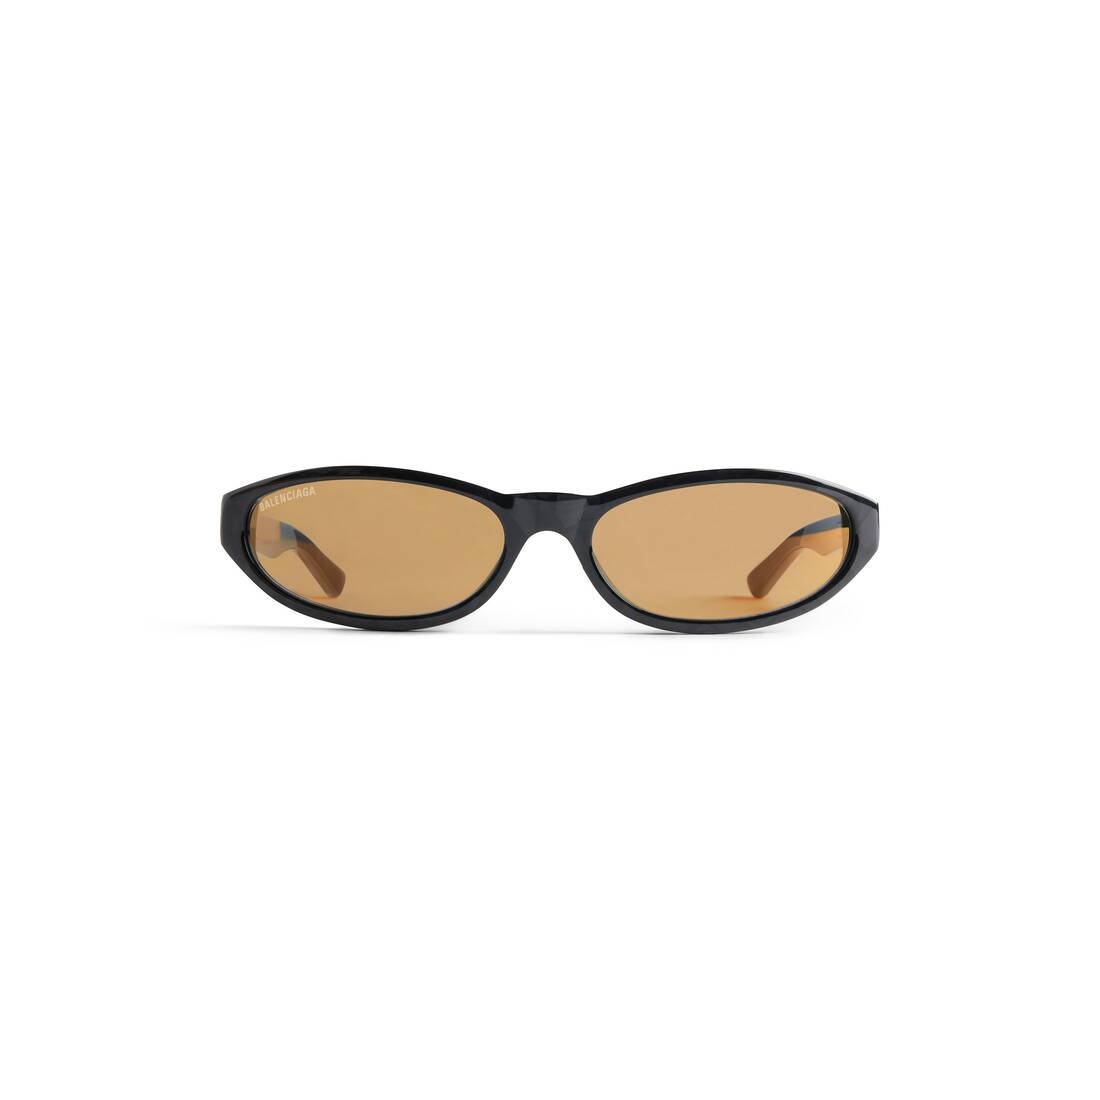 Neo Round Sunglasses in Black - 1